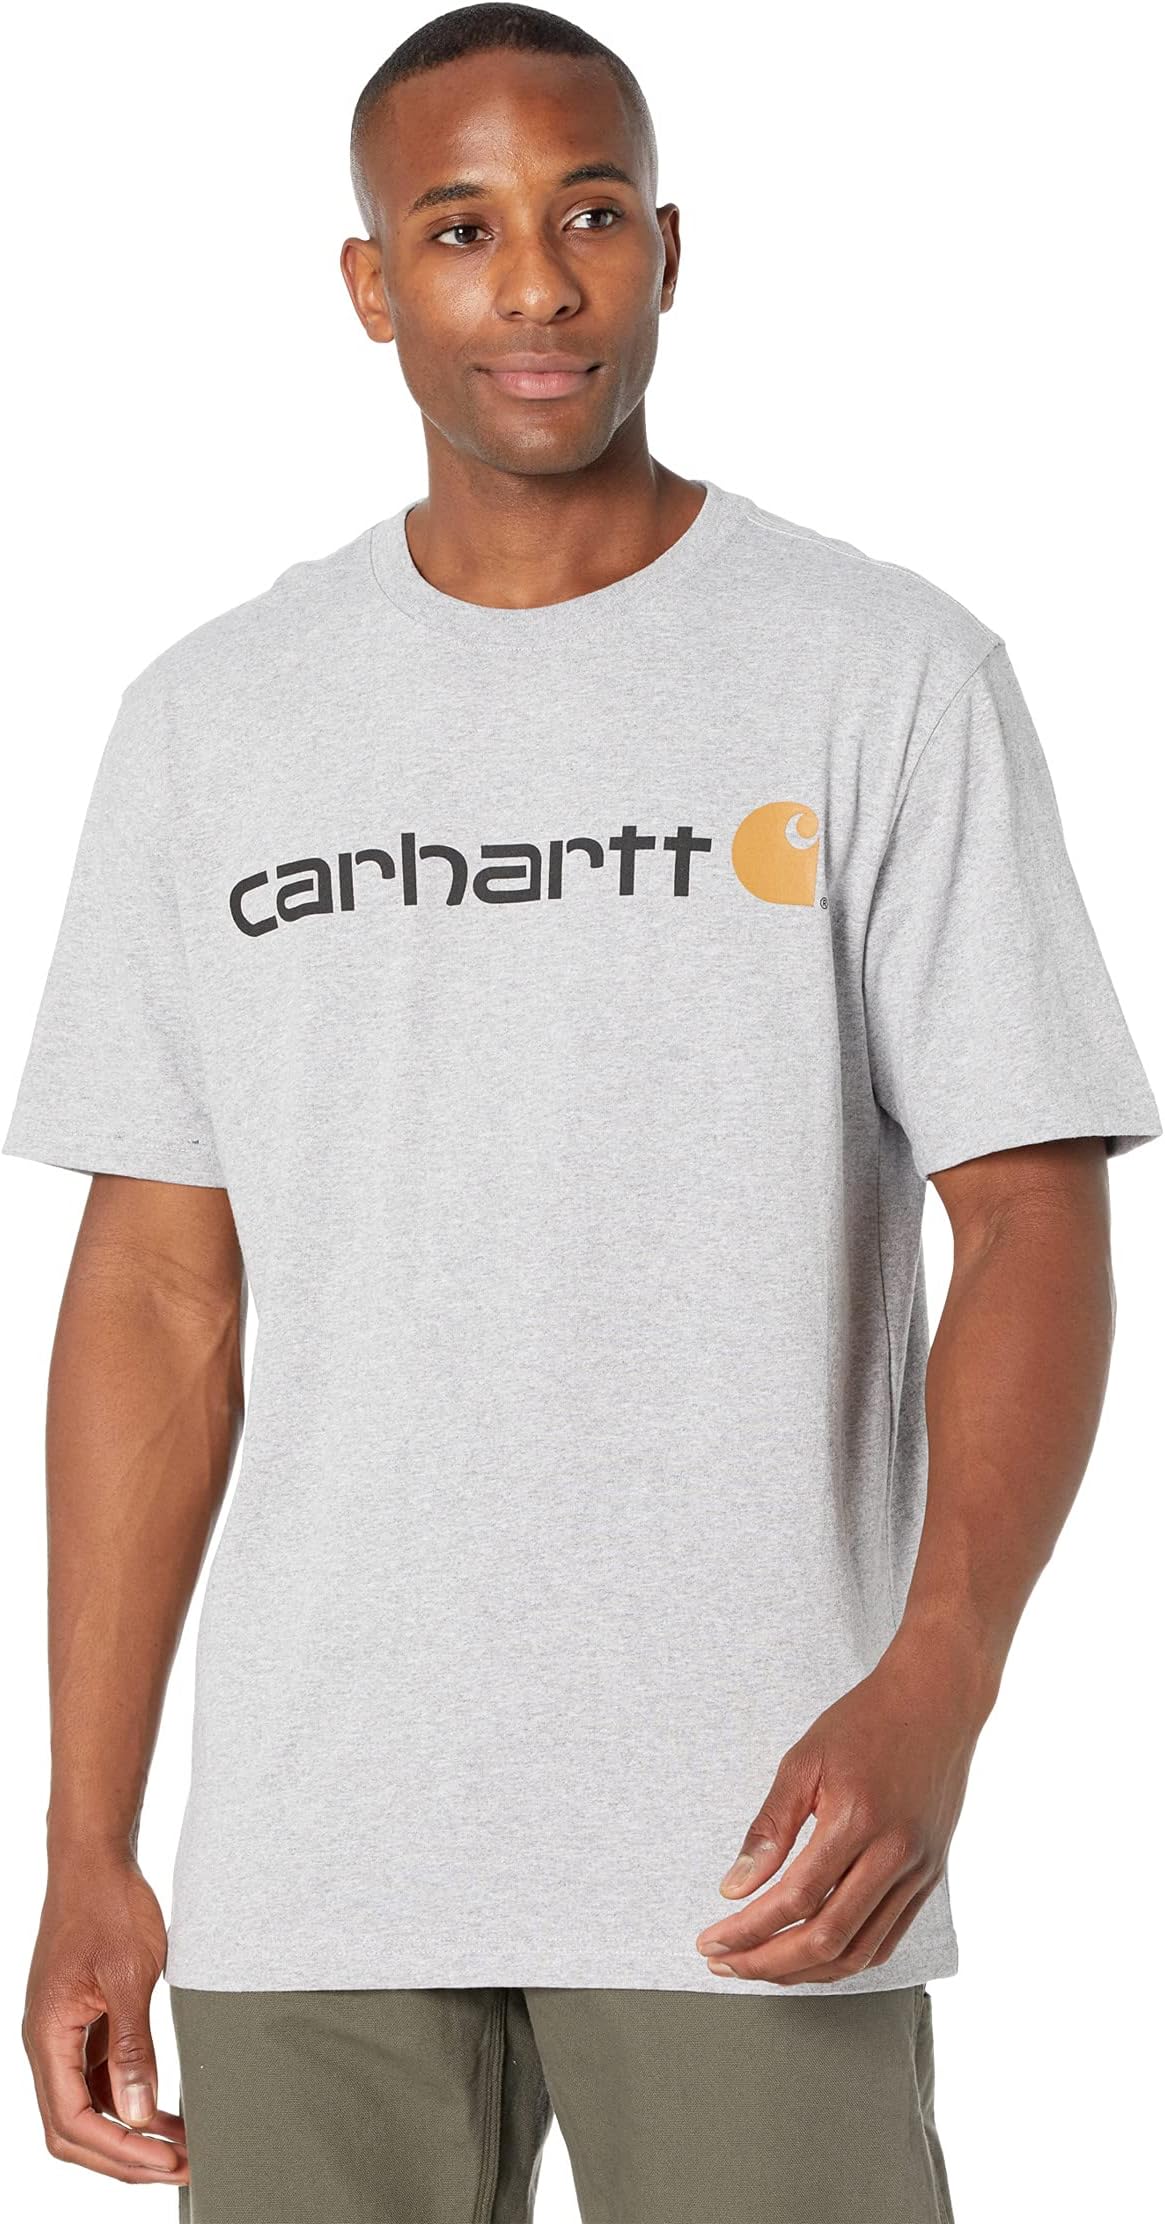 Футболка с фирменным логотипом (S/S) Carhartt, цвет Heather Grey футболка с фирменным логотипом s s carhartt цвет marmalade heather